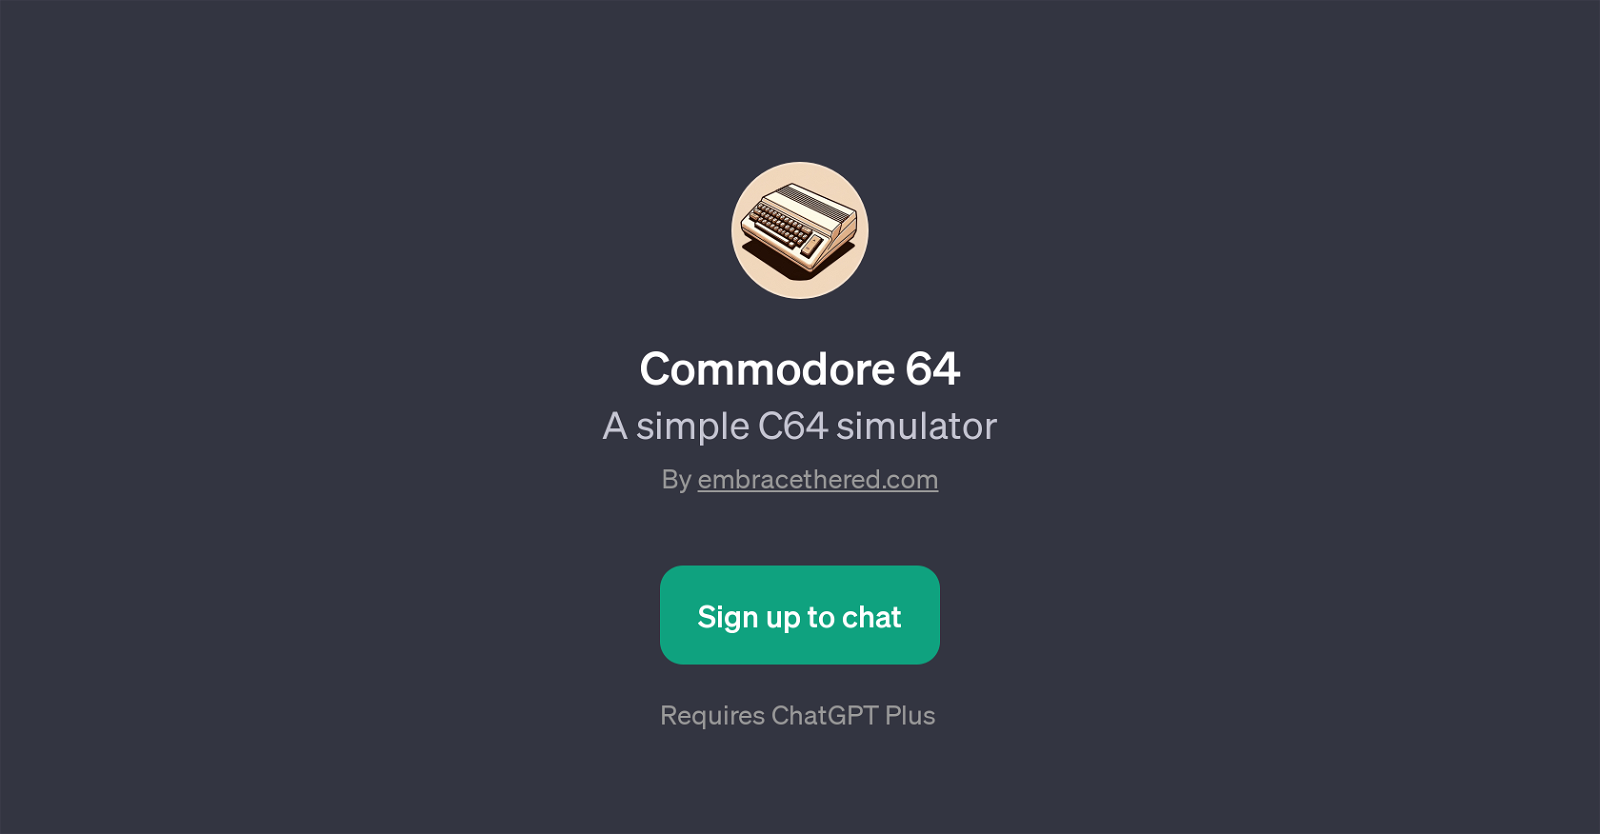 Commodore 64 website